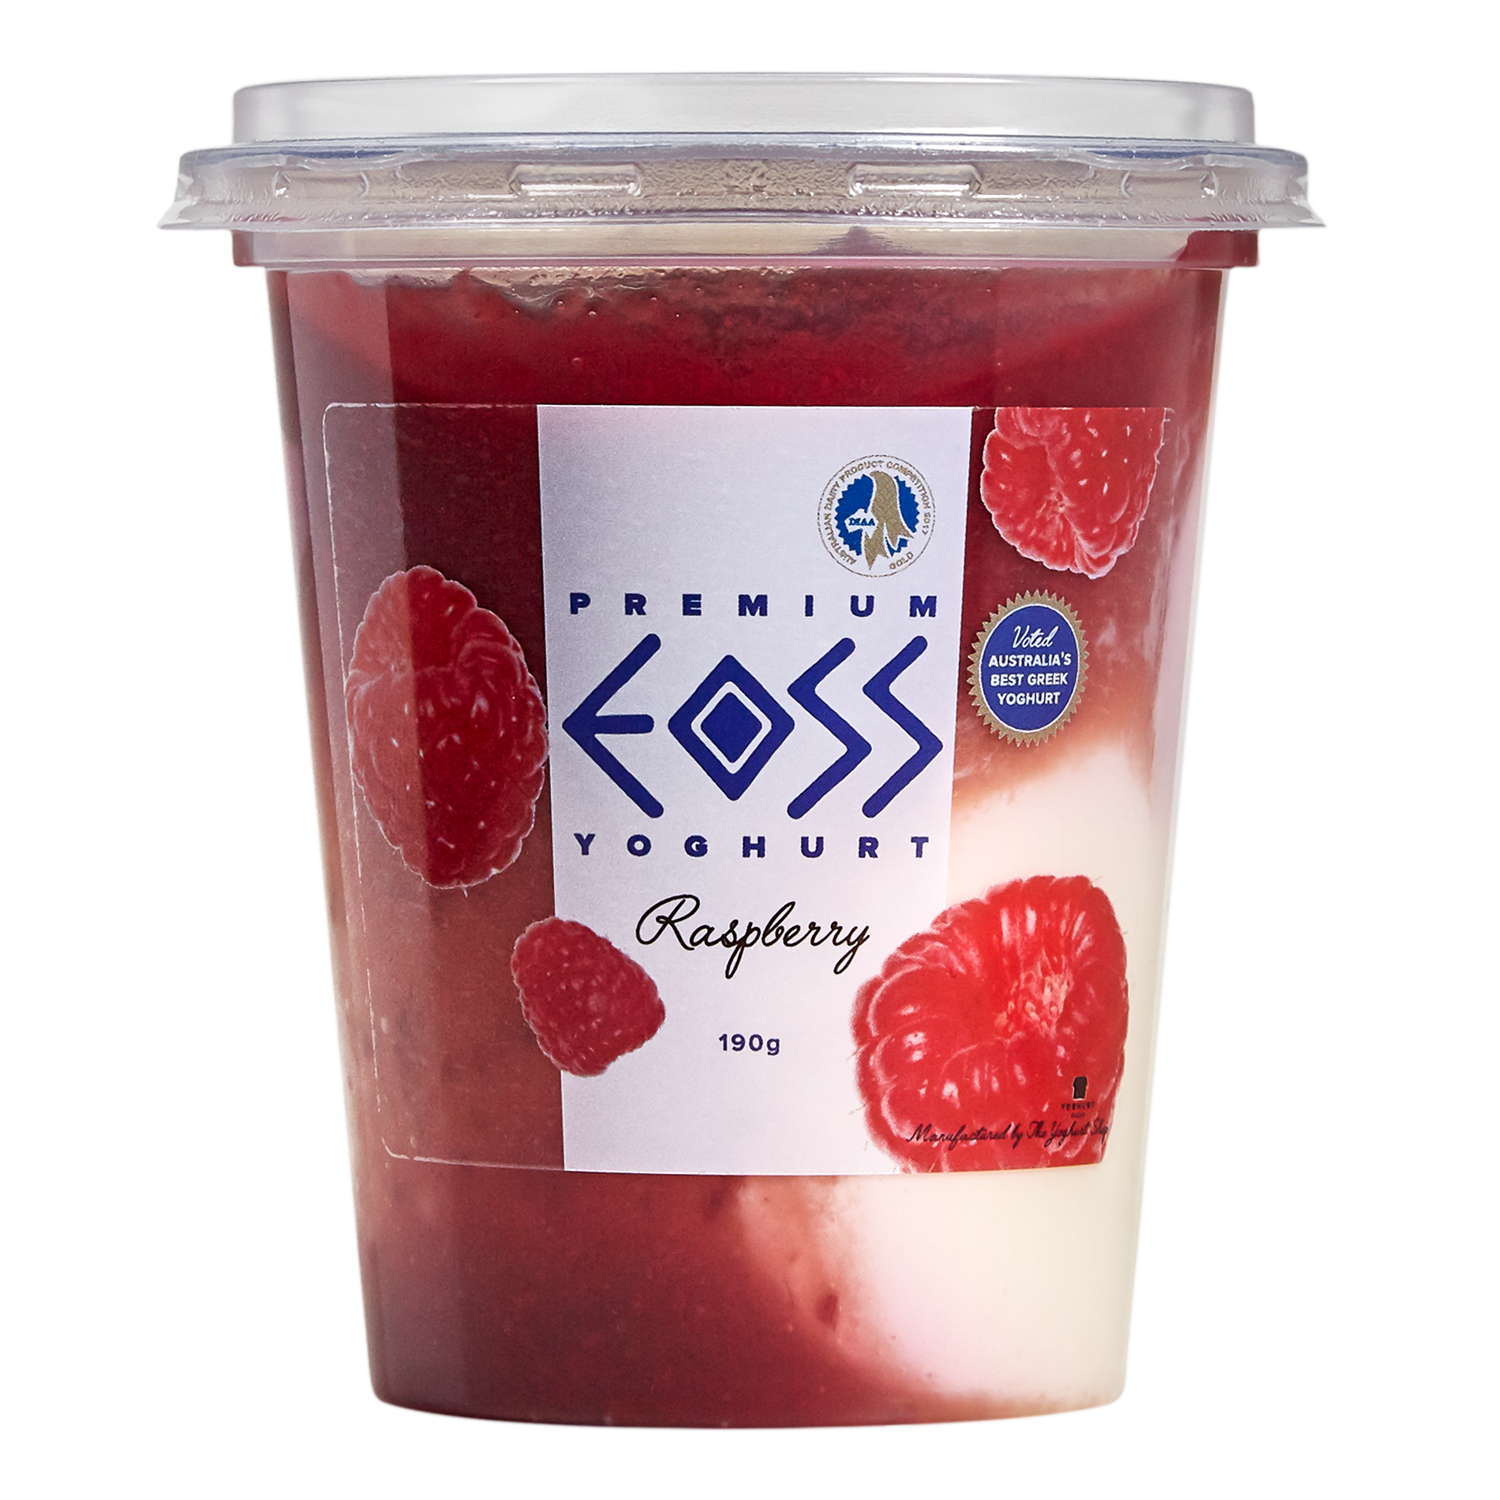 EOSS Yoghurt Raspberry Cup 190g